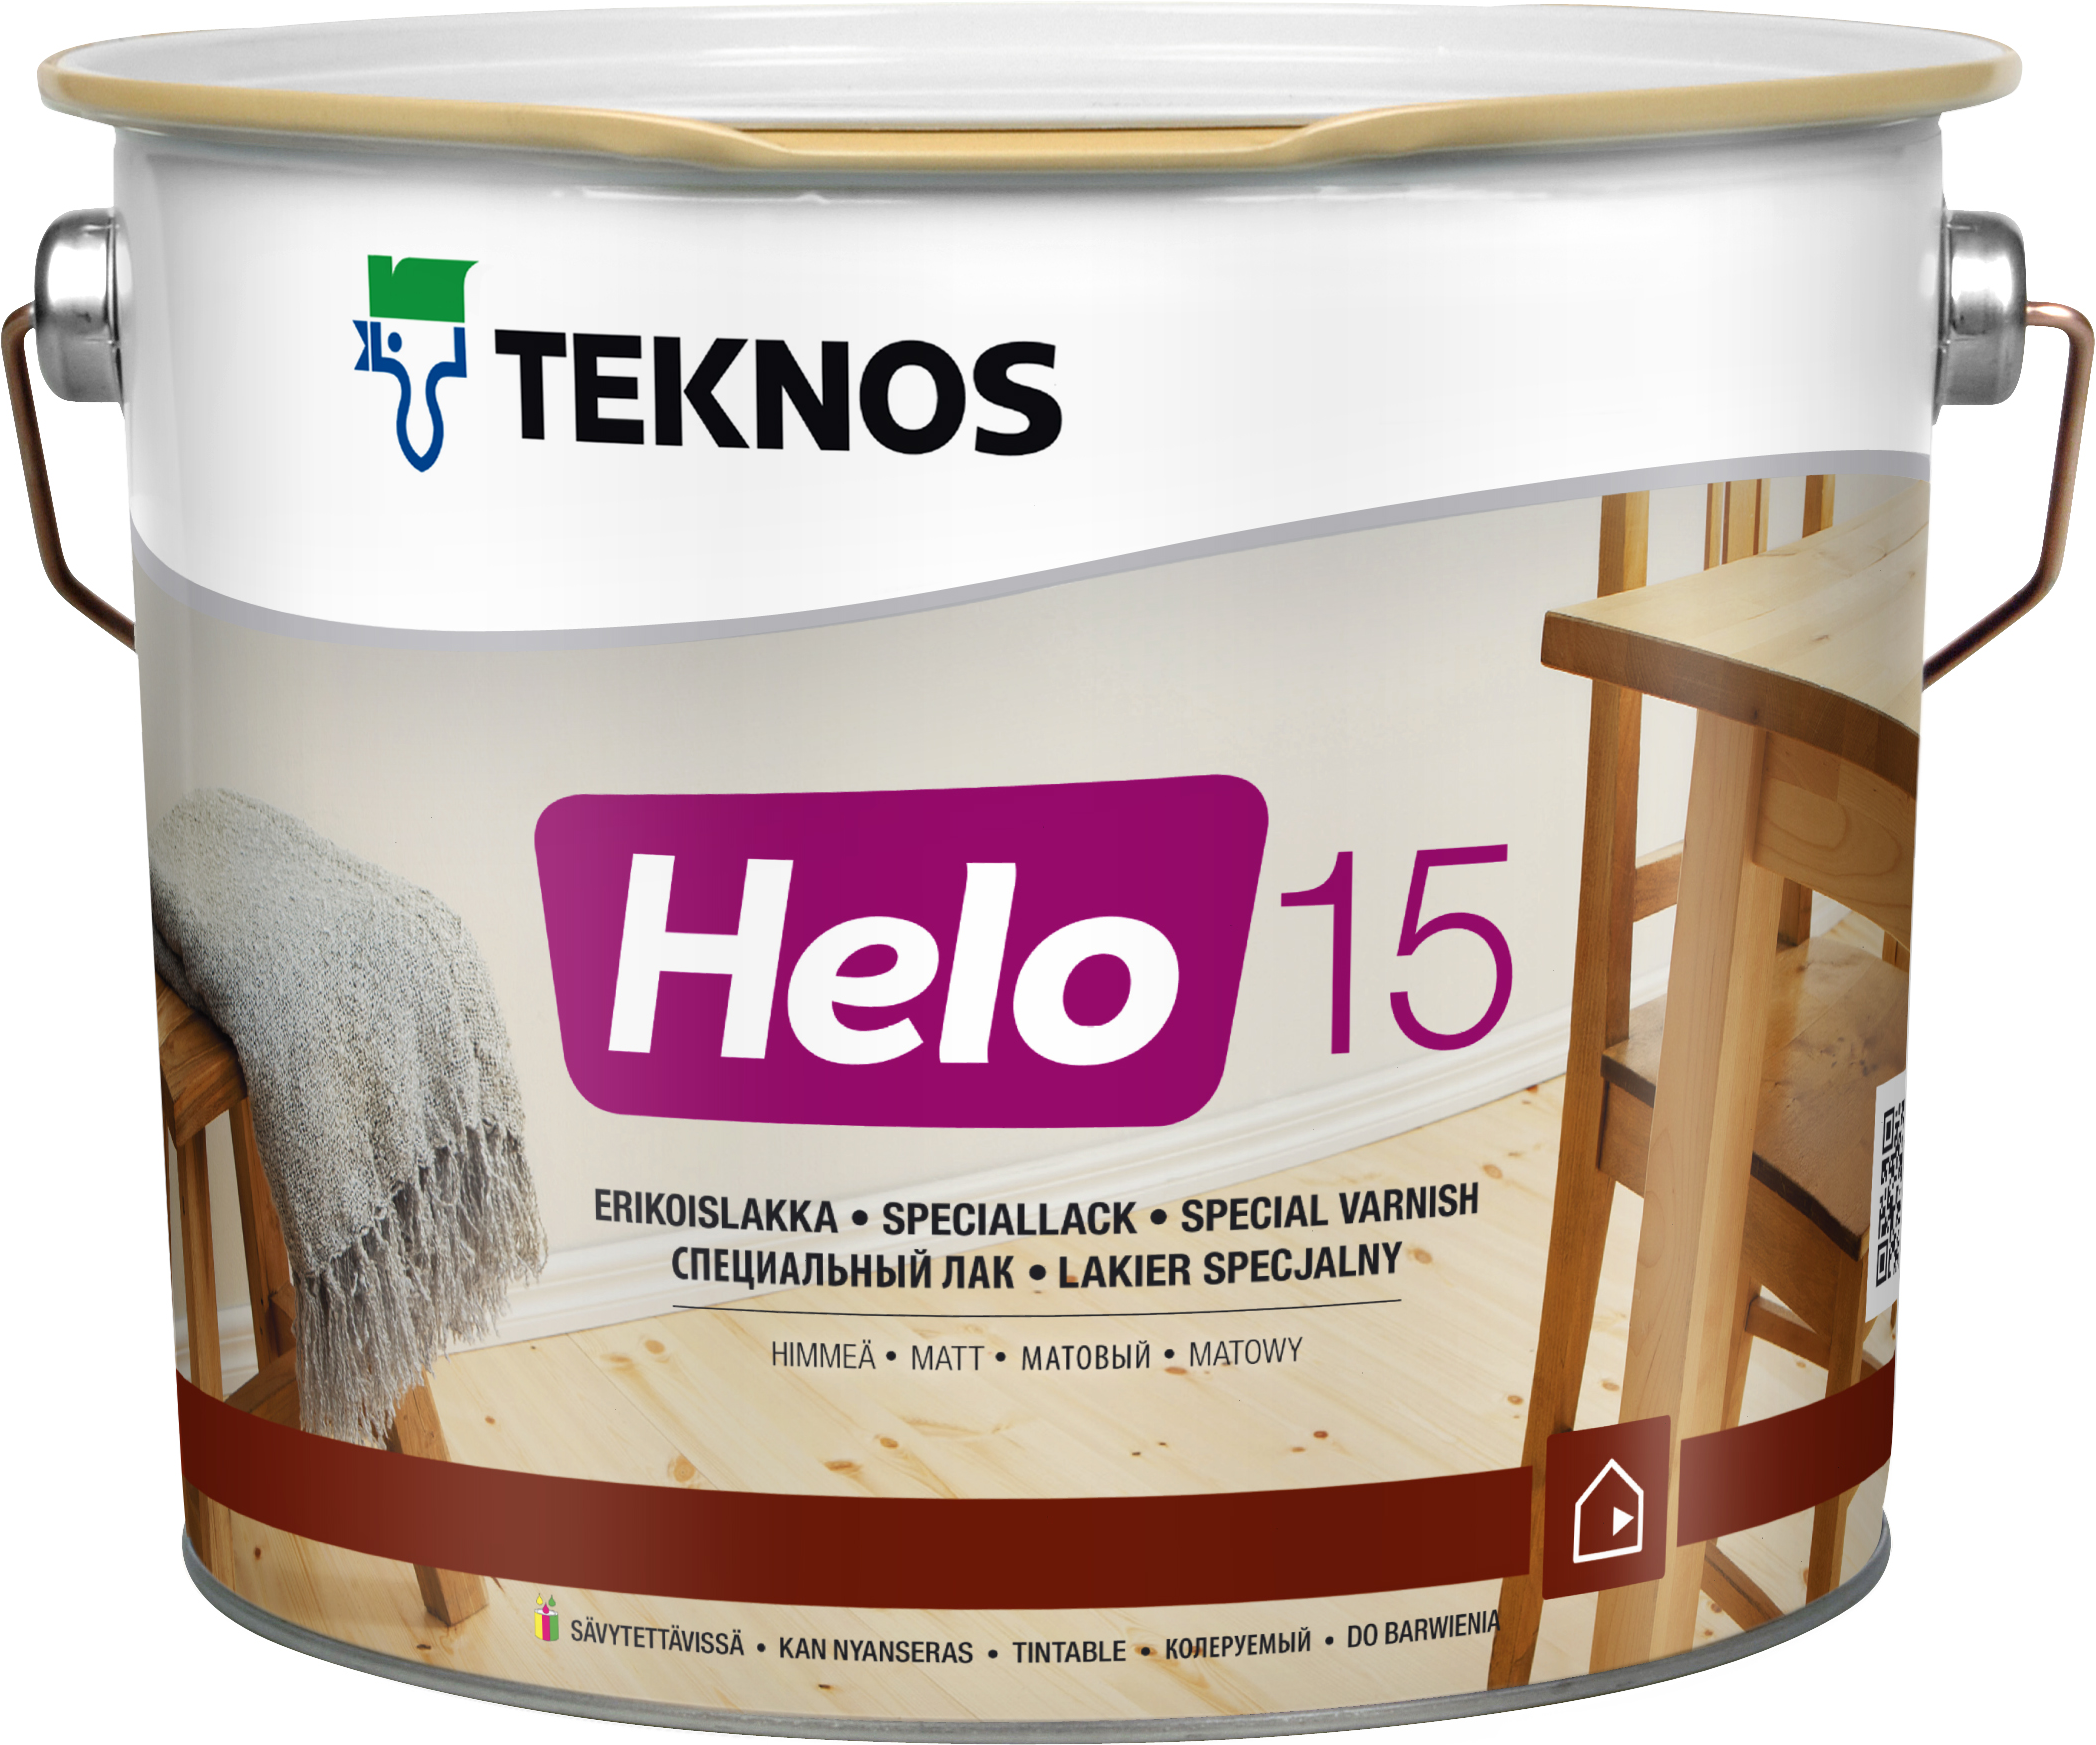 Teknos Helo 15, 0.9 л, Лак специальный